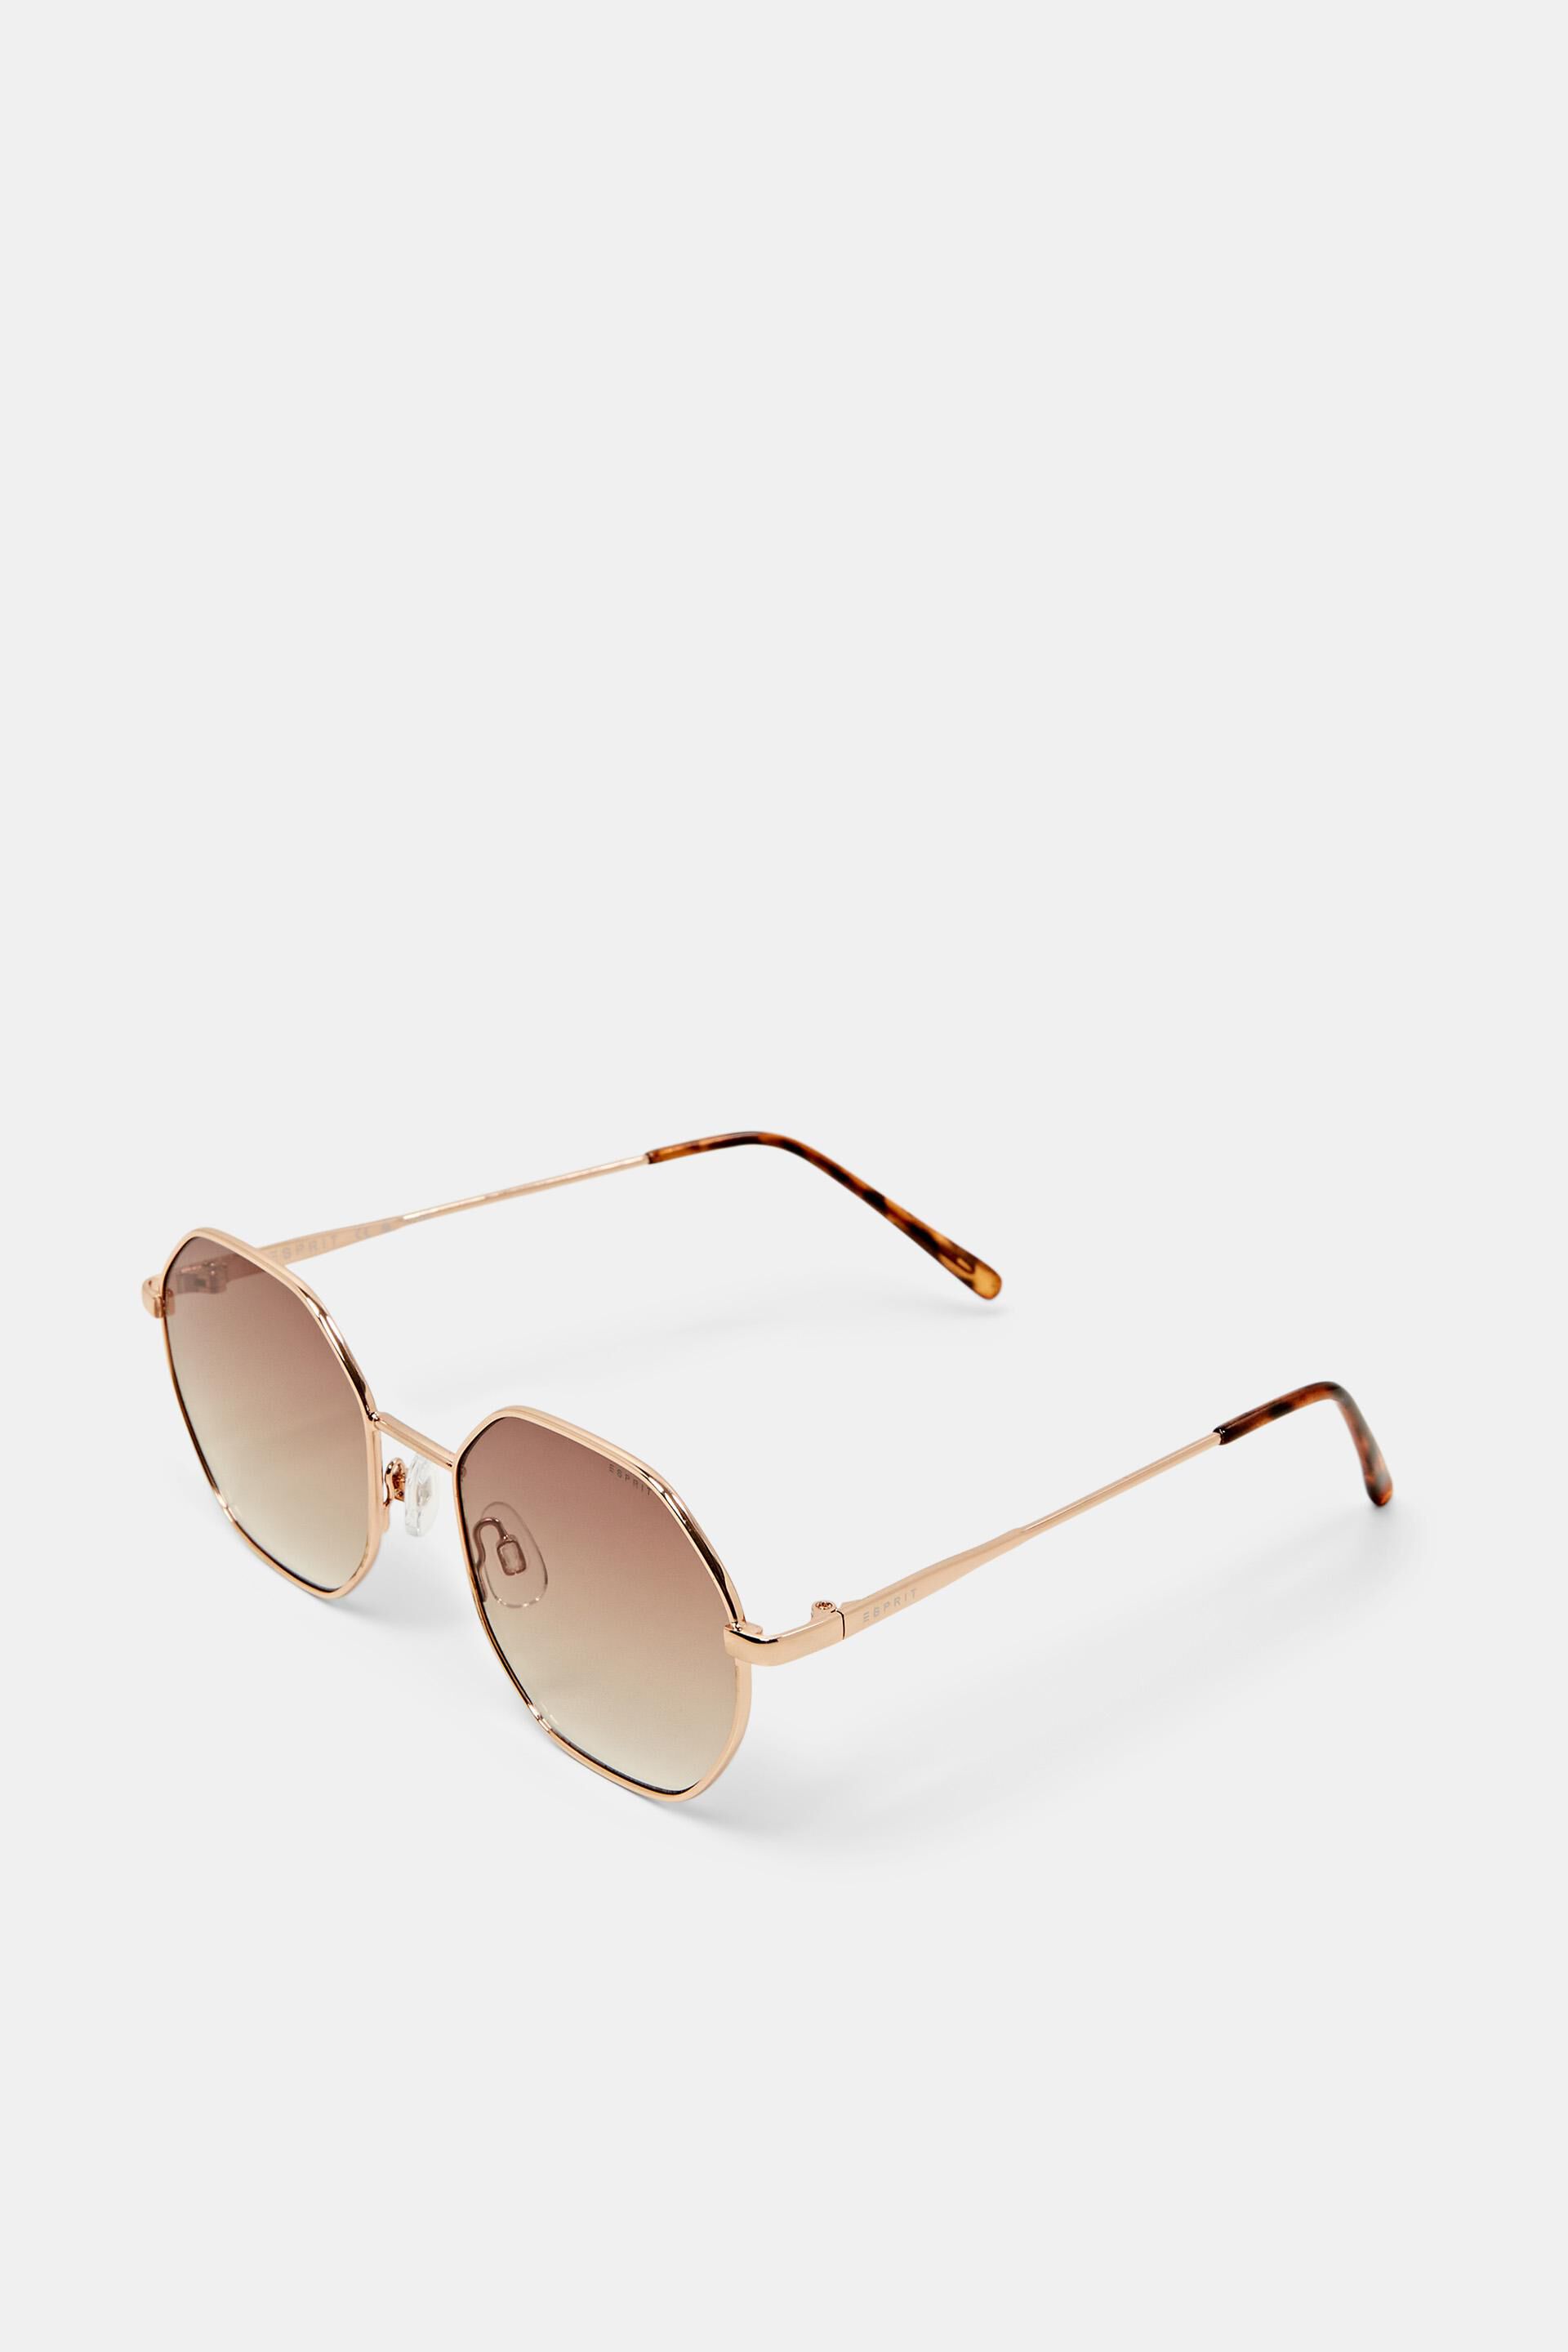 Esprit Online Store Sonnenbrille mit filigranem goldfarbenem Metallrahmen